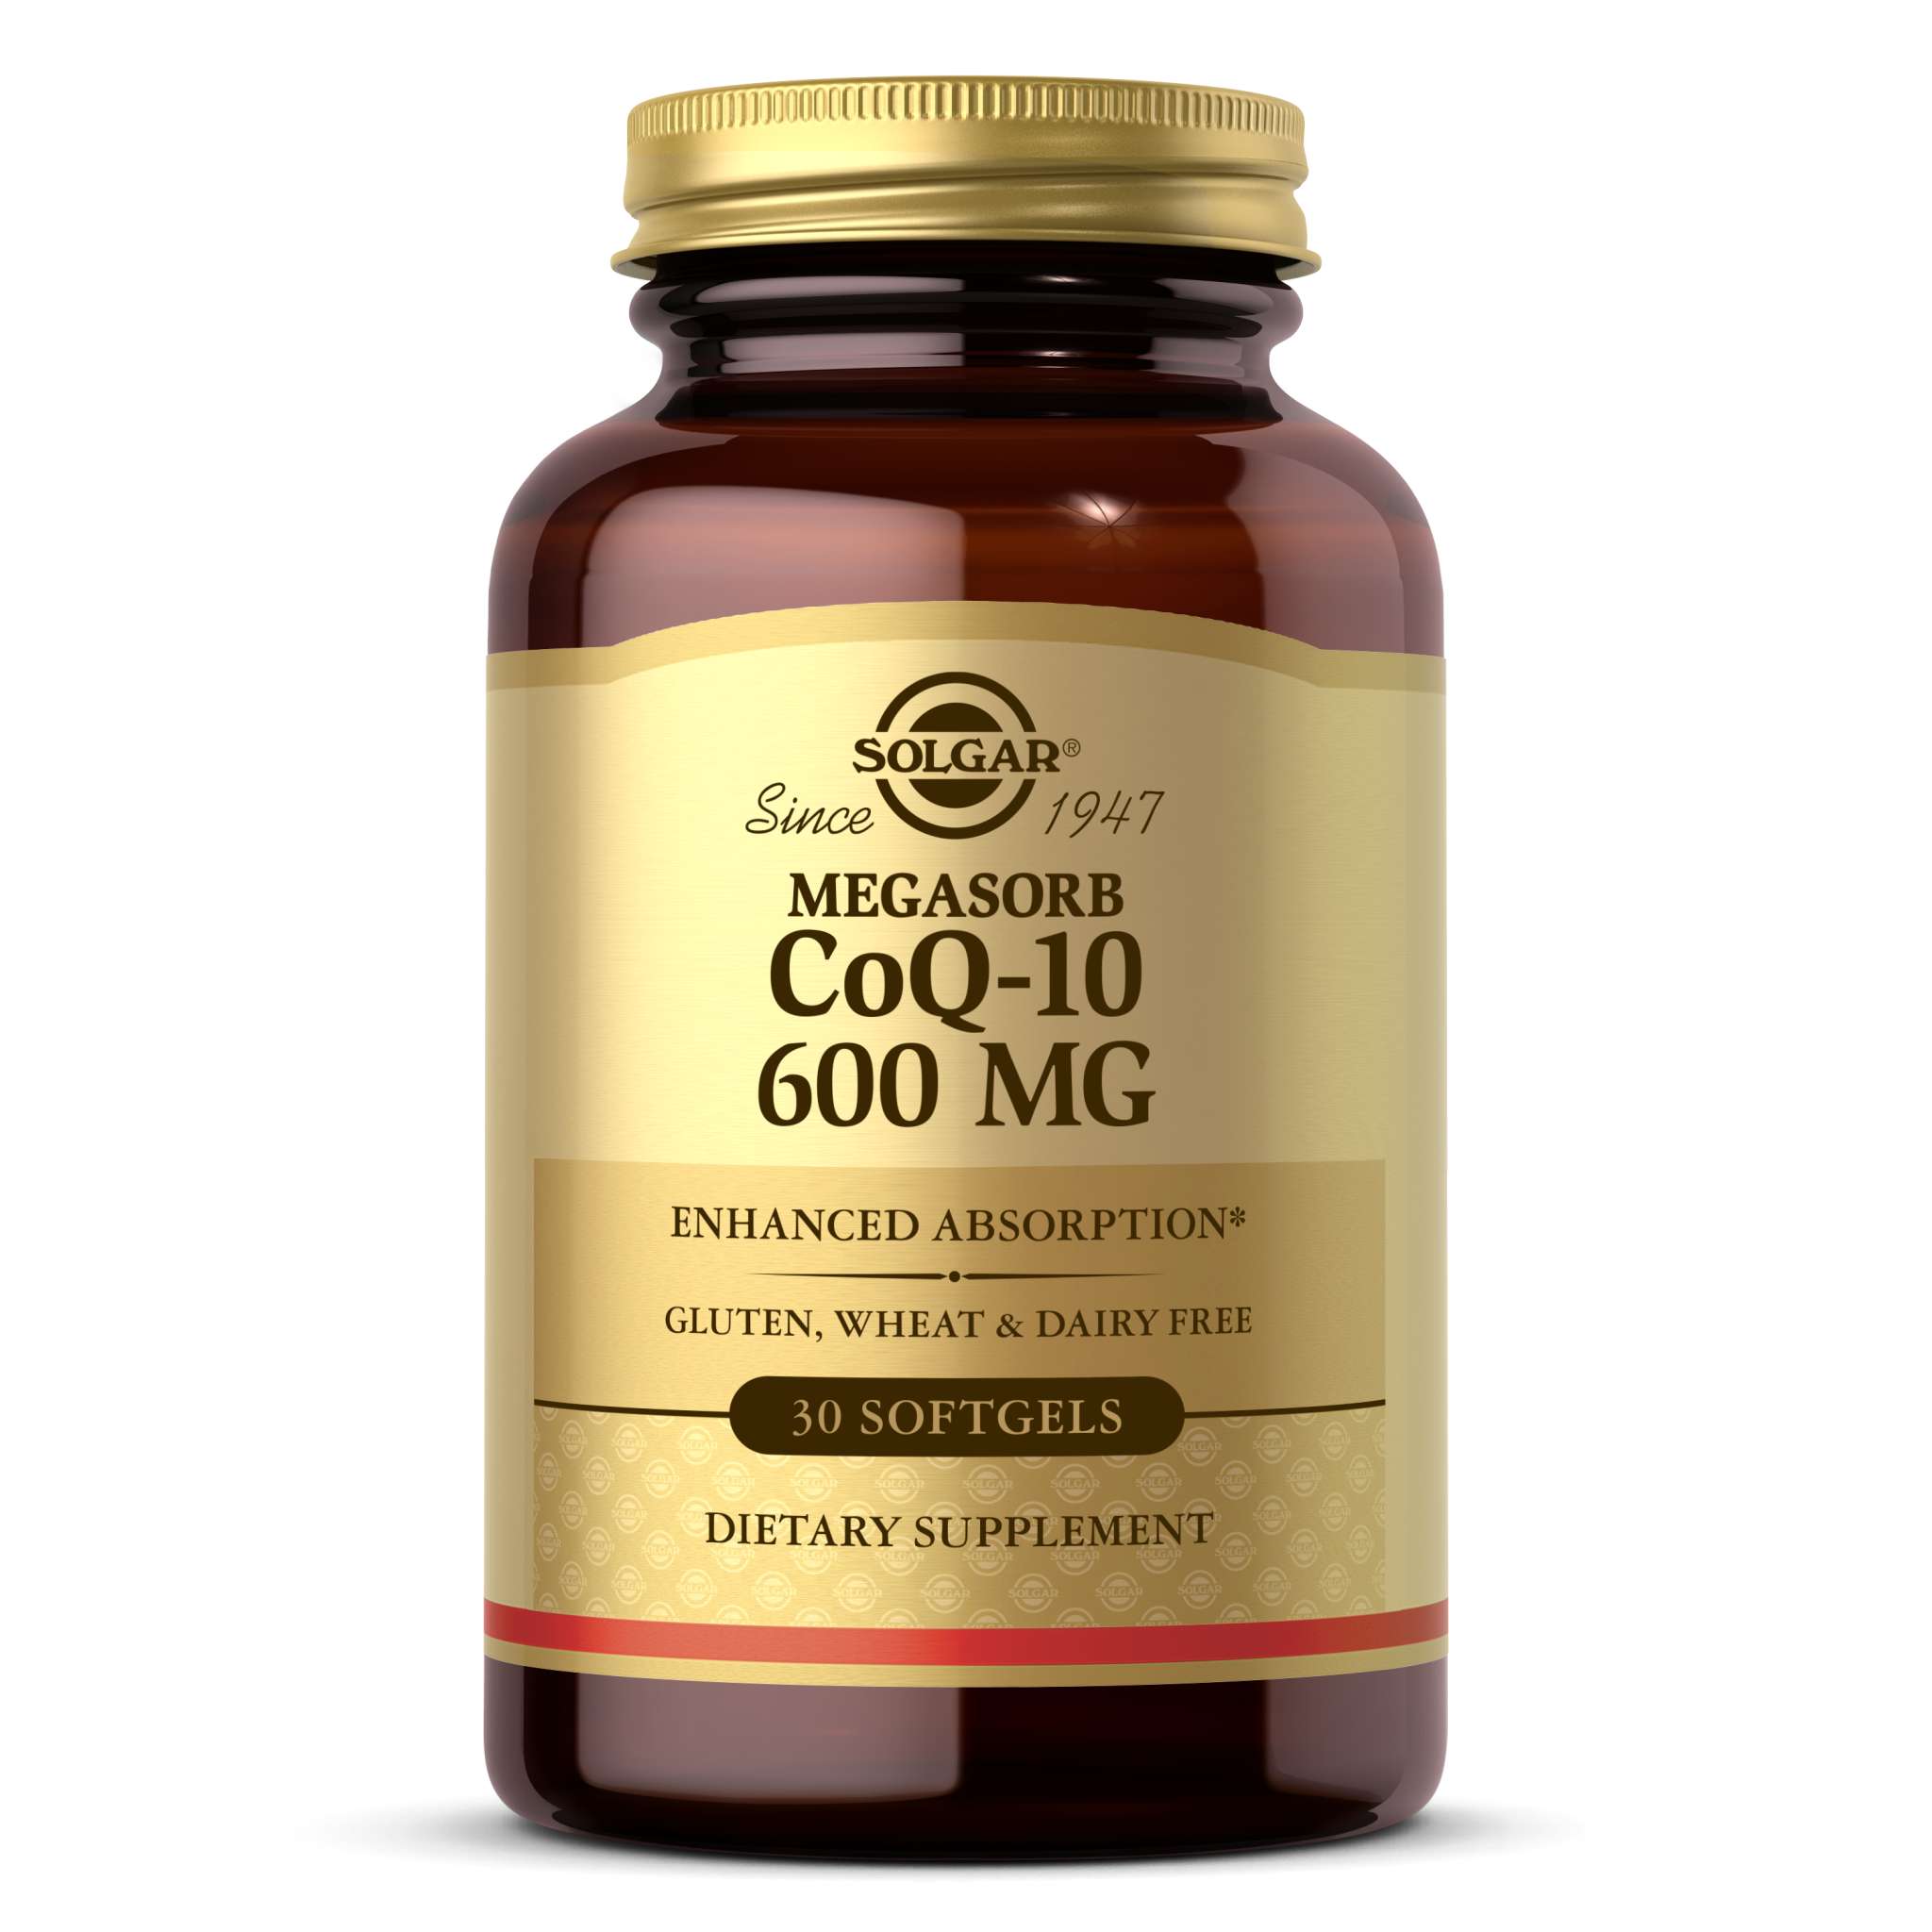 Solgar - Coq10 600 mg softgel